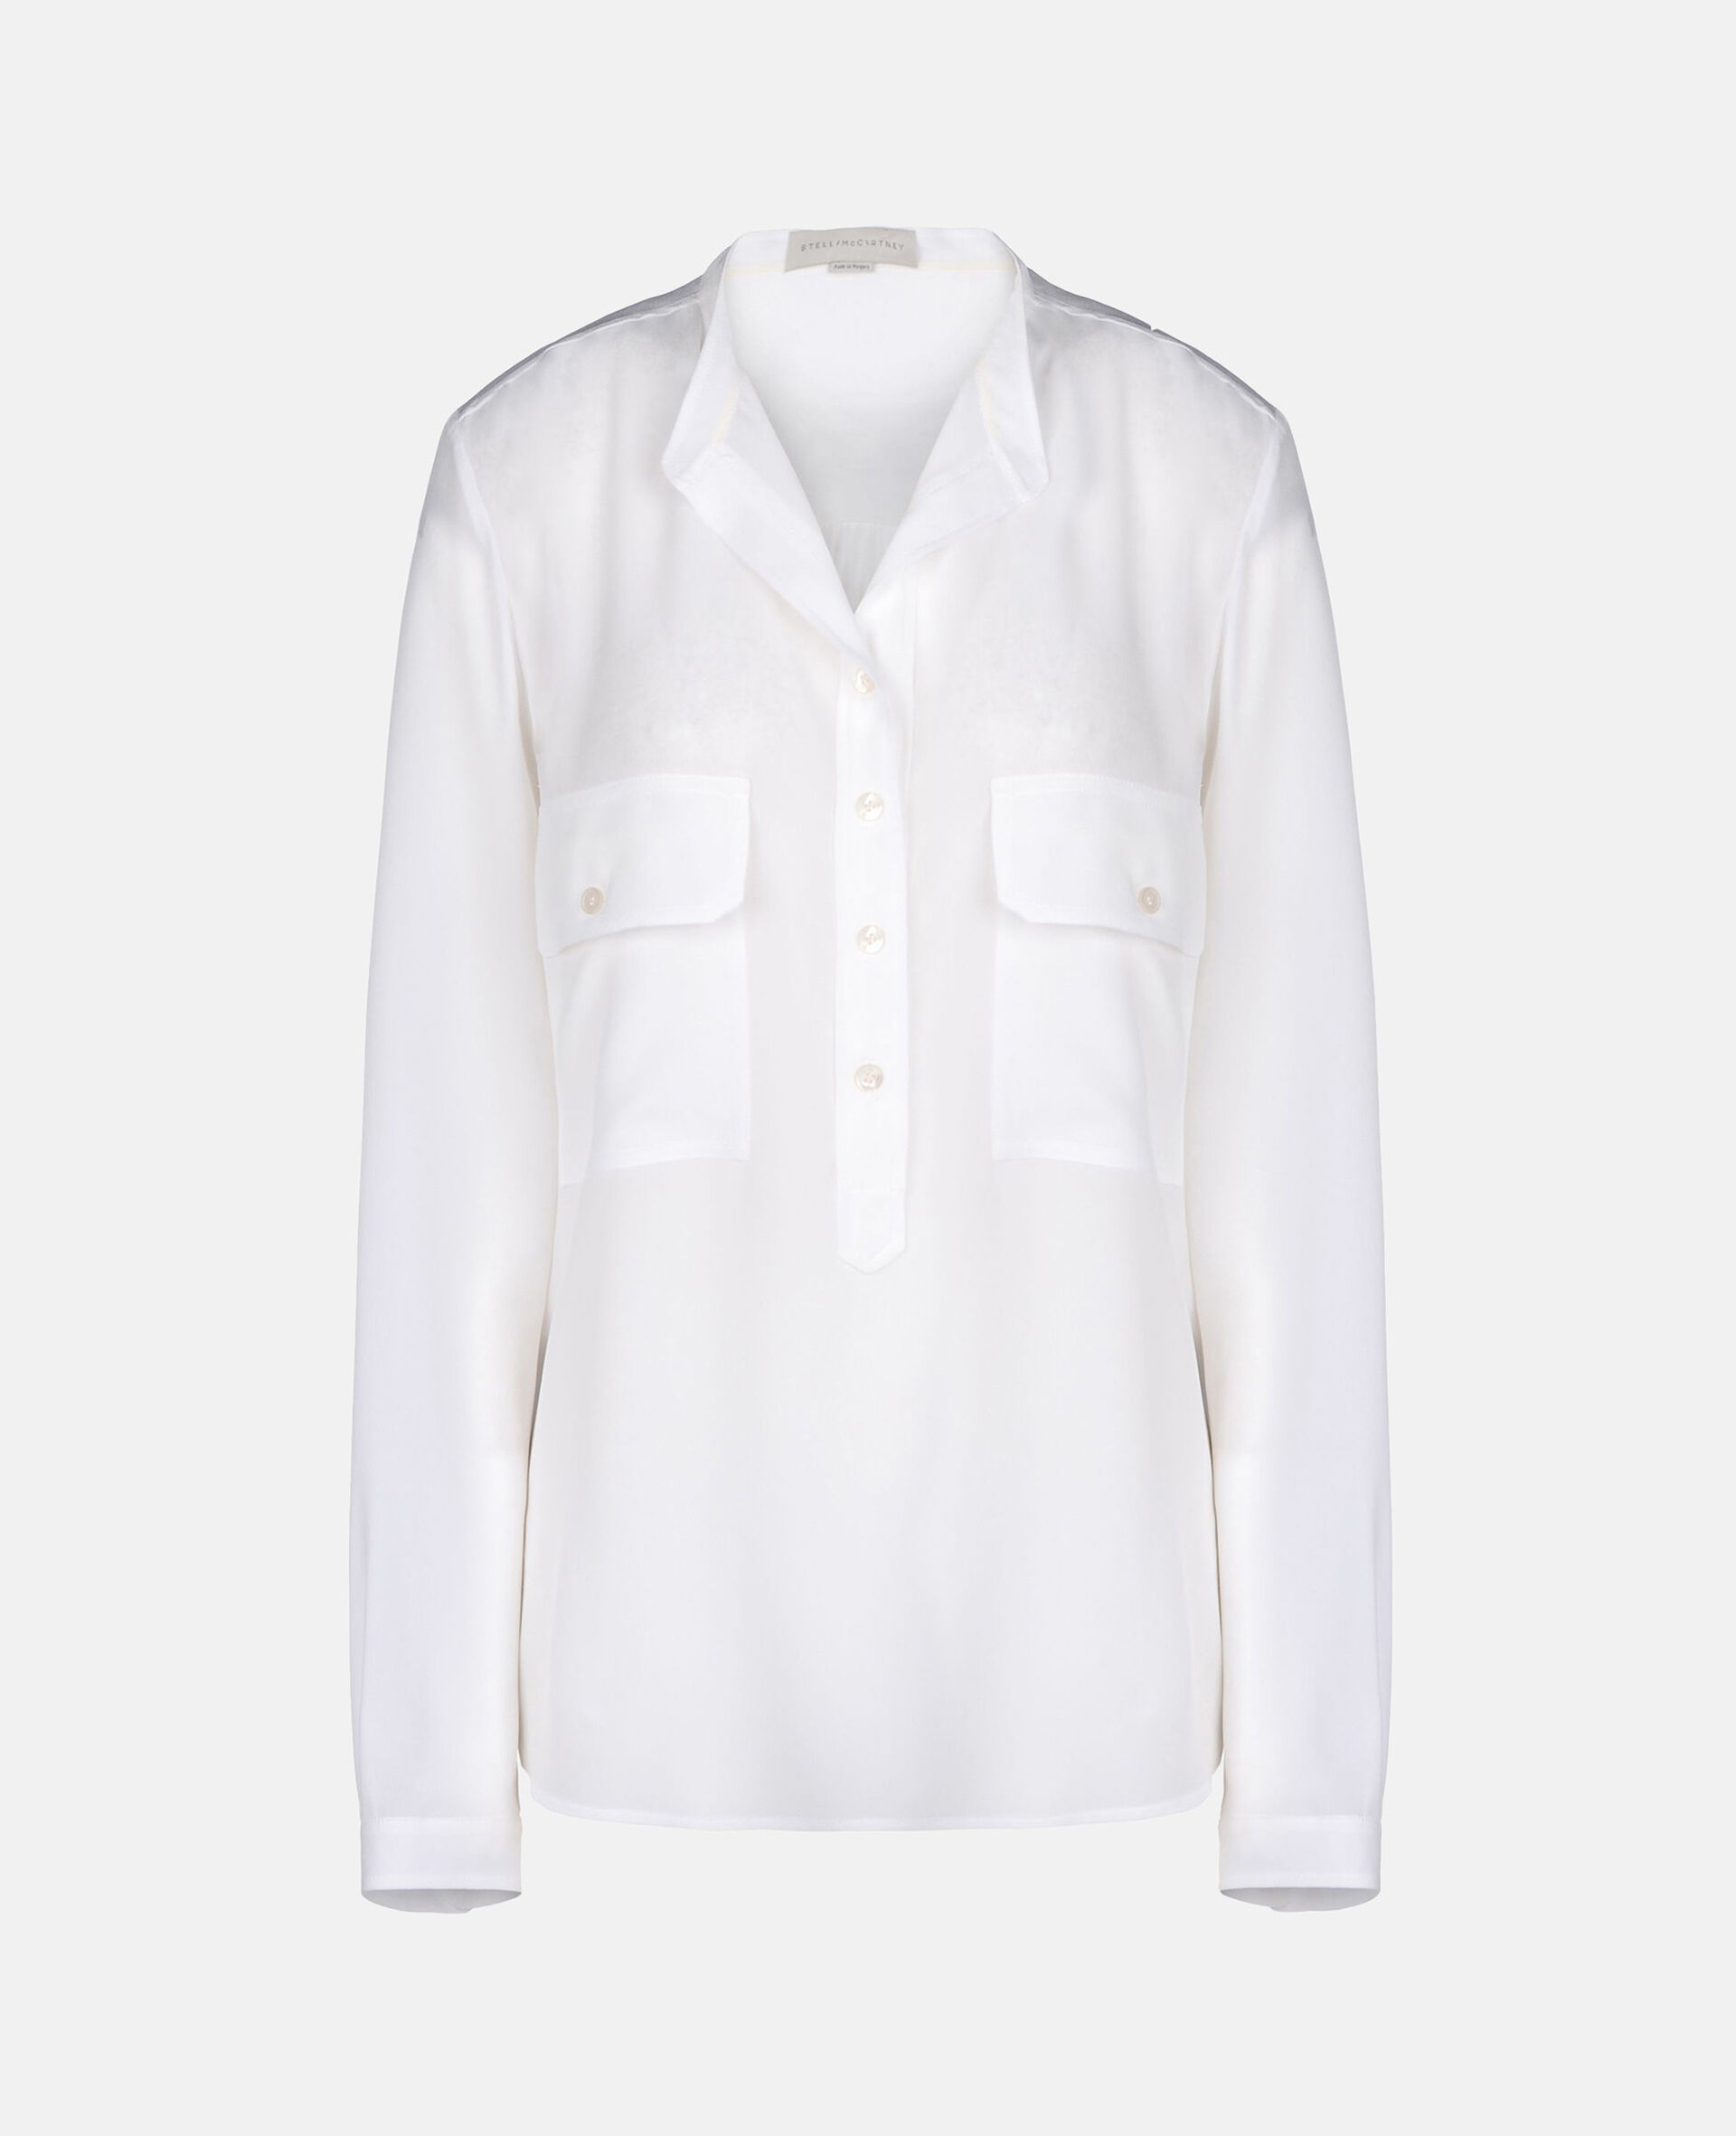 Estelle Shirt-White-medium